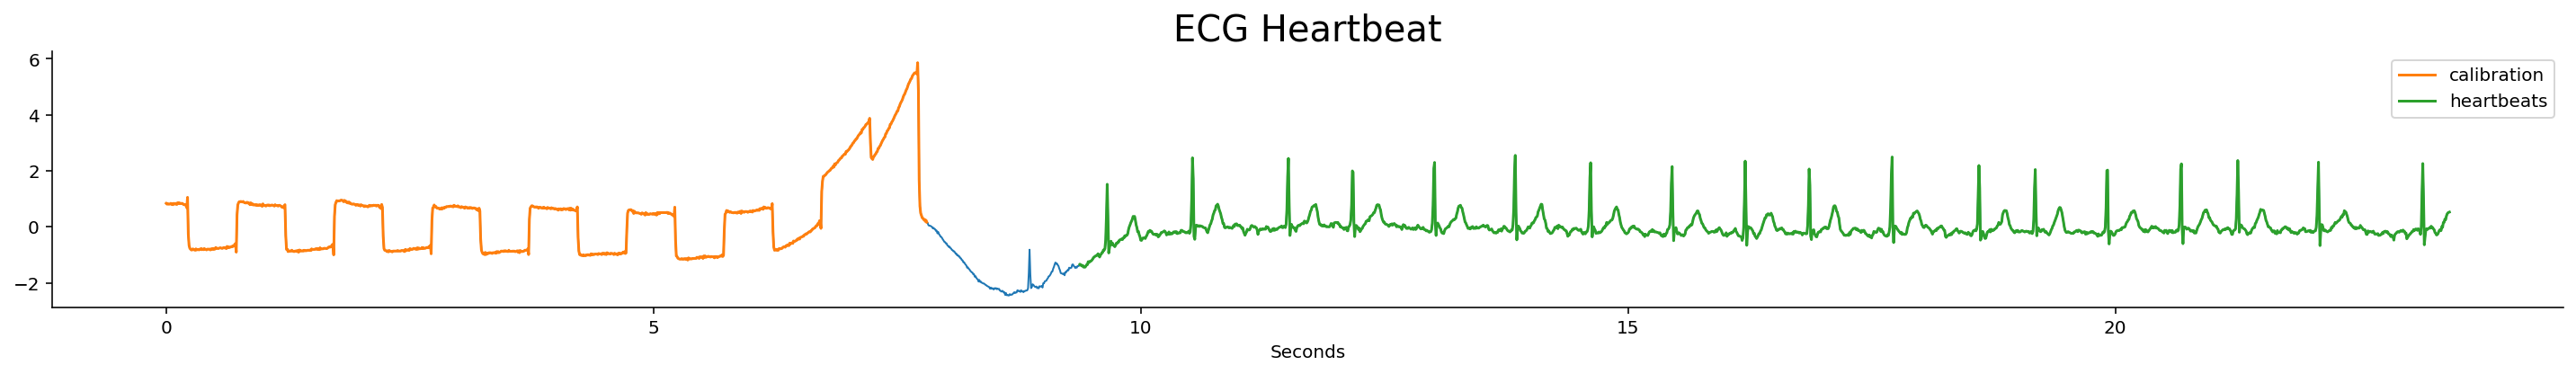 The ECG heartbeat dataset